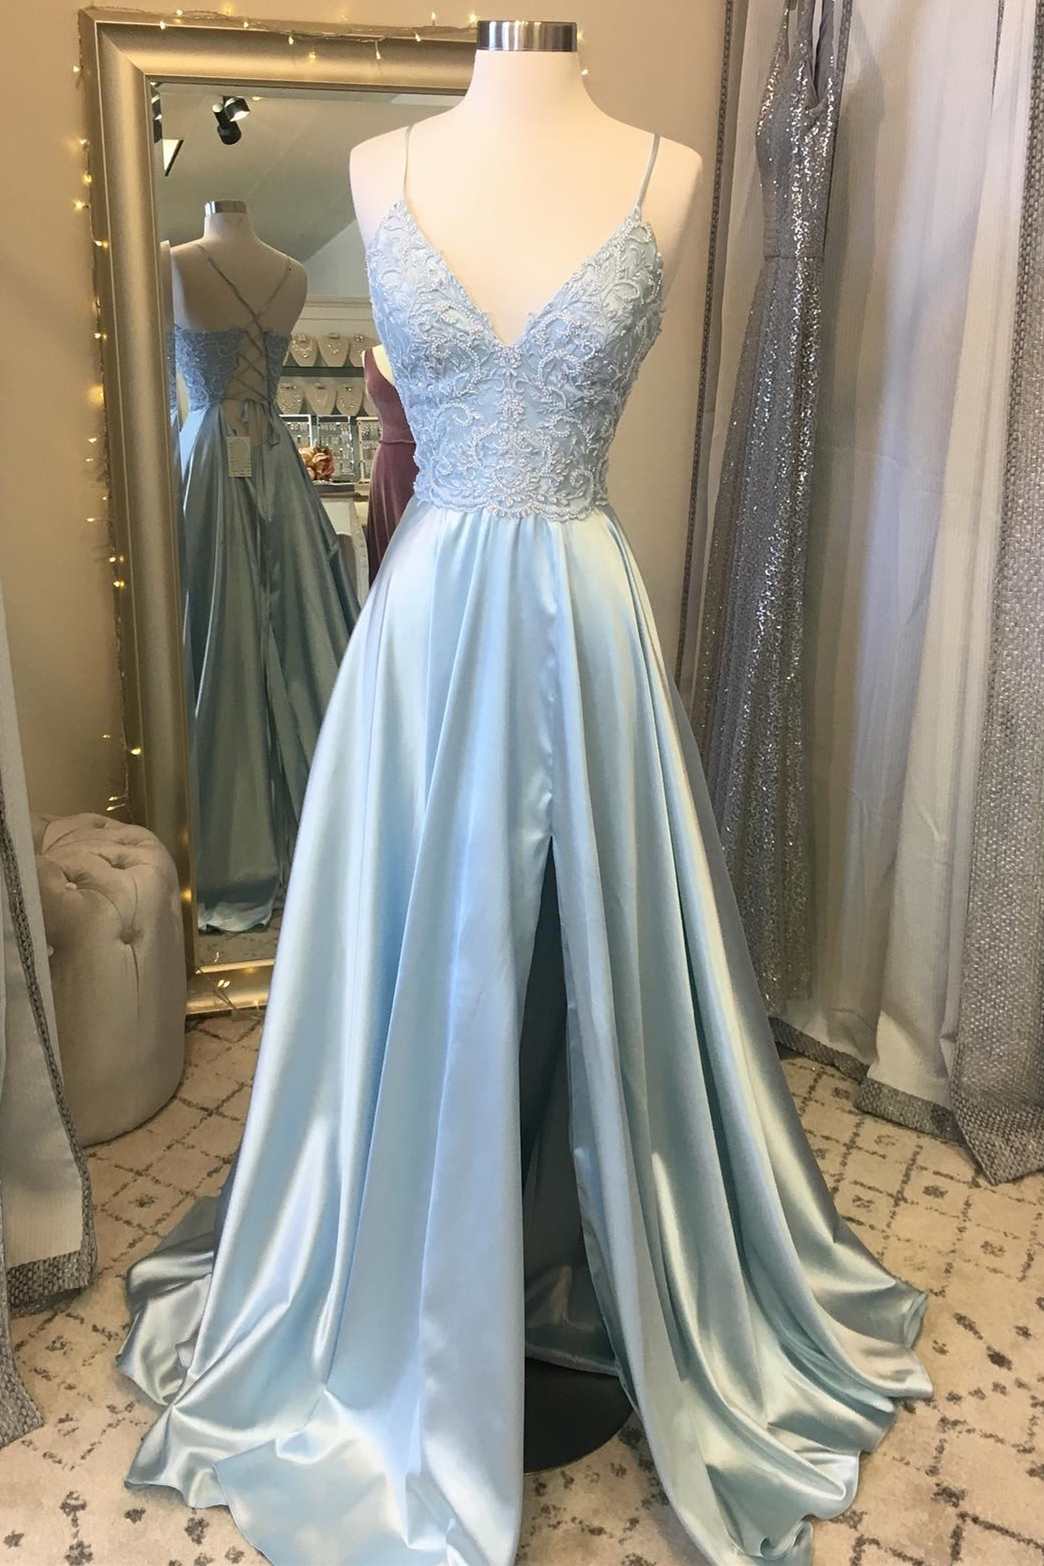 Unique Wedding Dress, Light Blue Lace Lace-Up Back A-Line Prom Dress with Slit